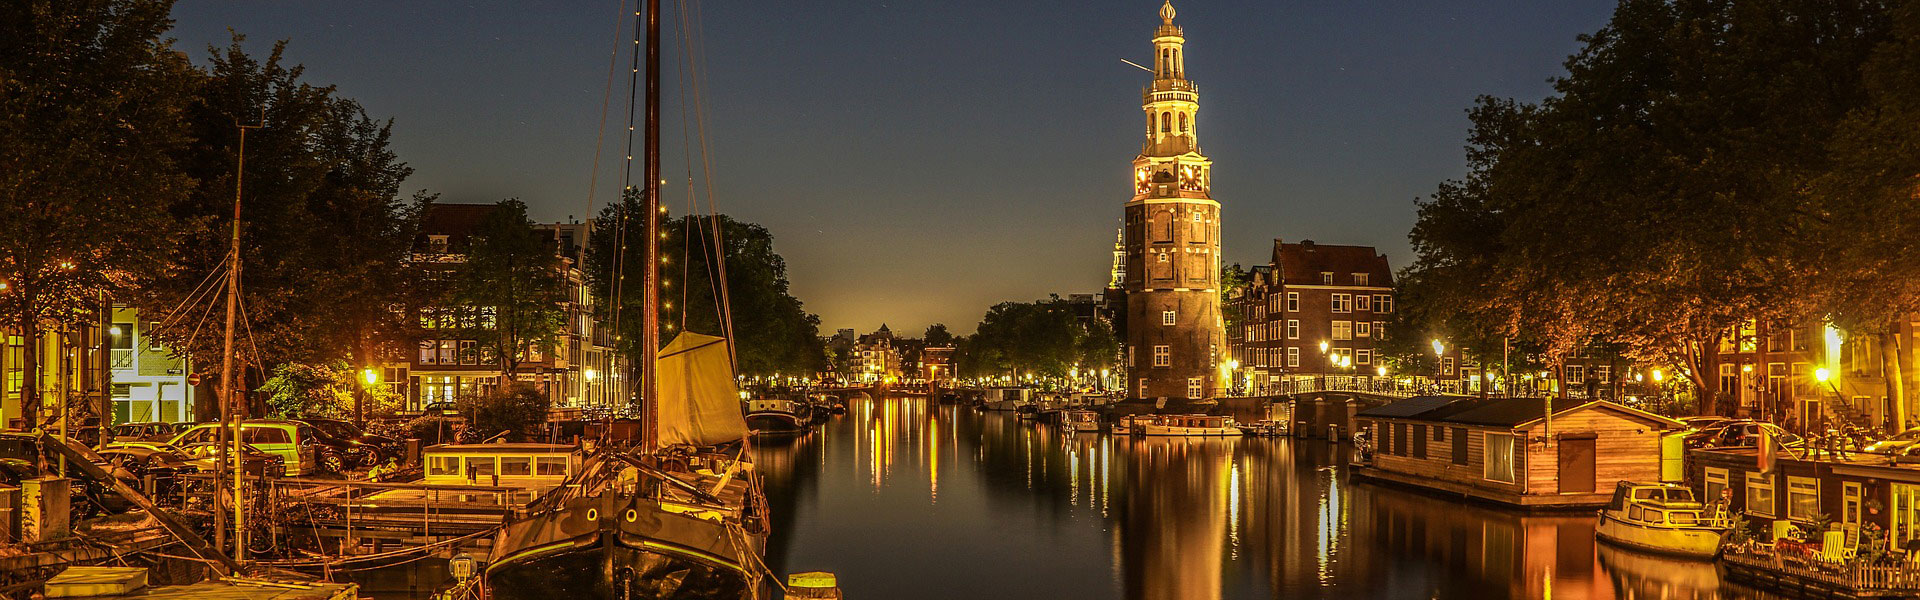 houseboat rental amsterdam